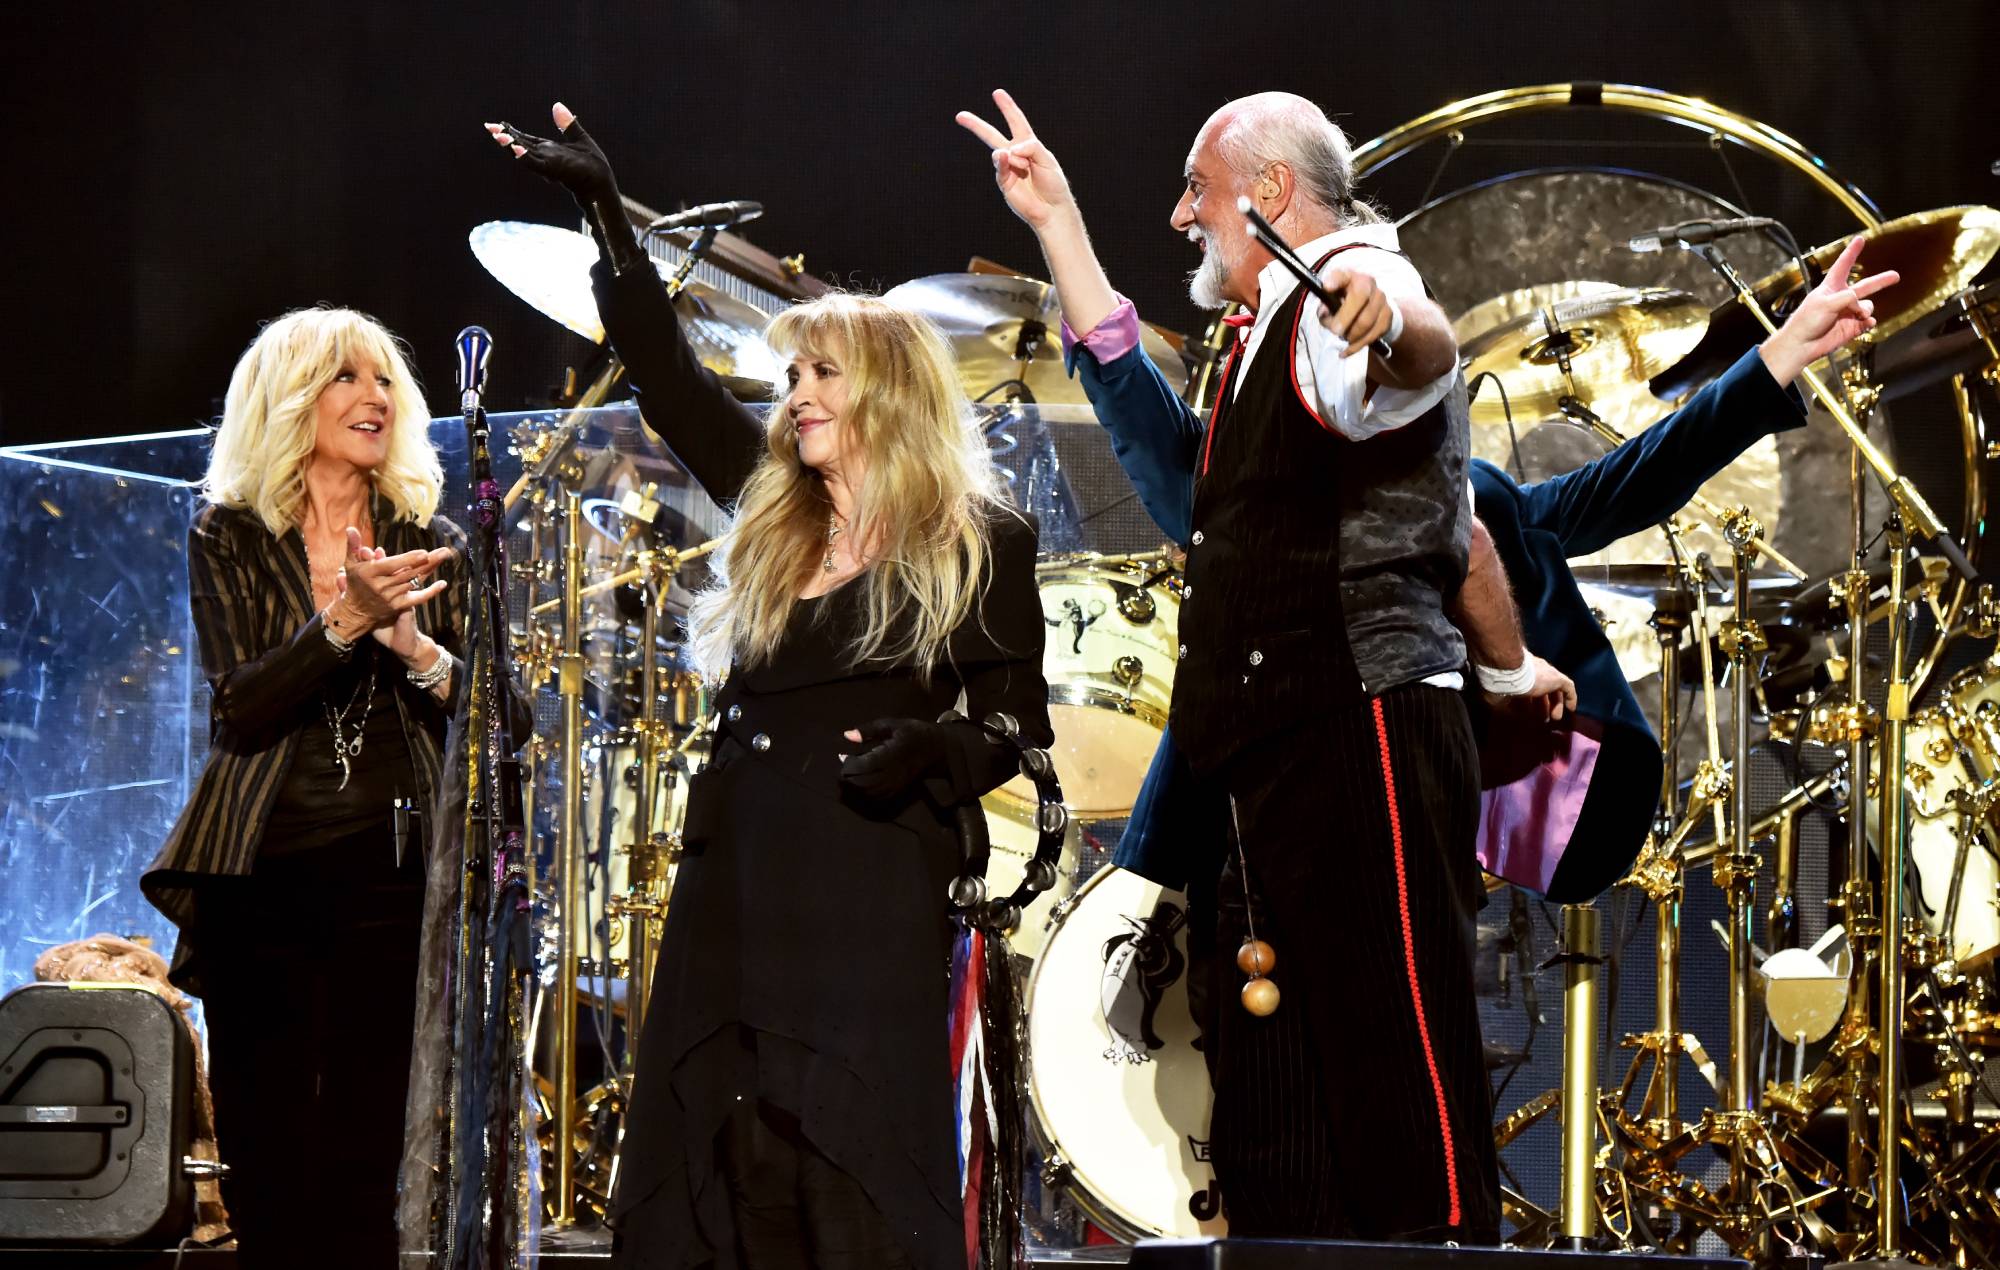 Christine McVie no cree que Fleetwood Mac vuelva a hacer una gira con Stevie Nicks